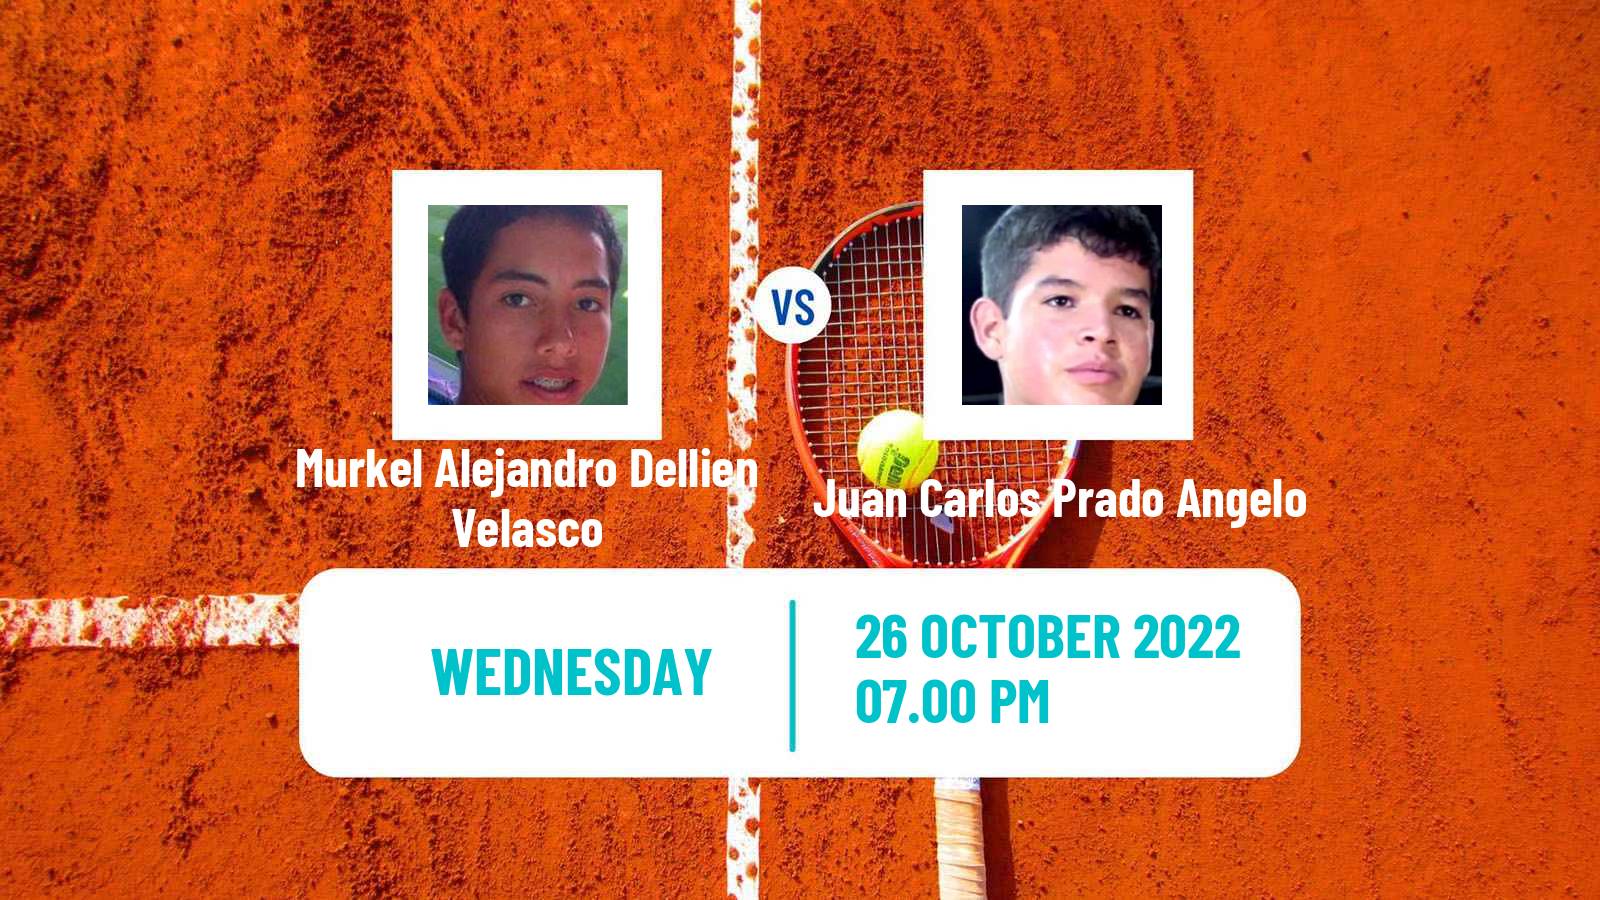 Tennis ITF Tournaments Murkel Alejandro Dellien Velasco - Juan Carlos Prado Angelo